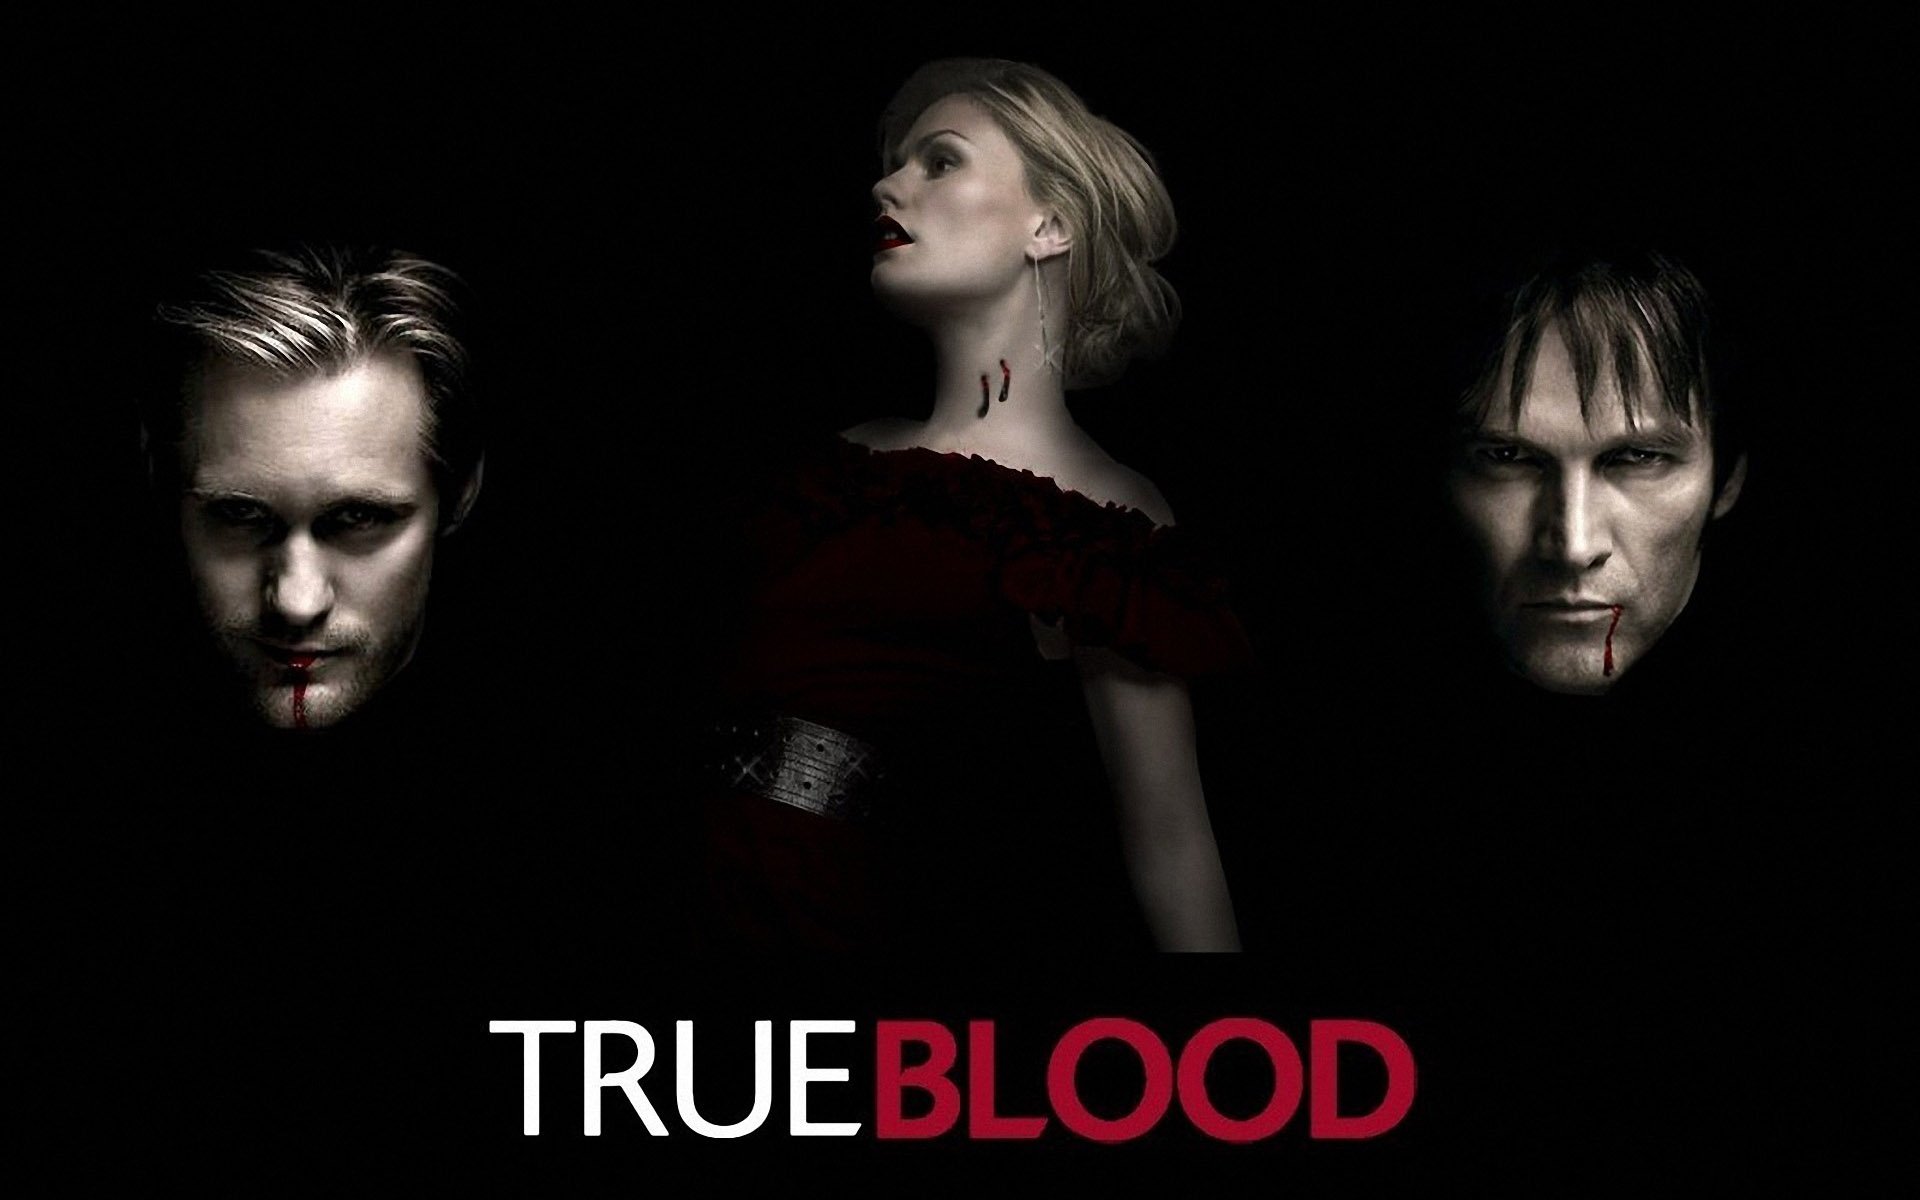 True Blood Drama Fantasy Mystery Dark Horror Hbo Television Series